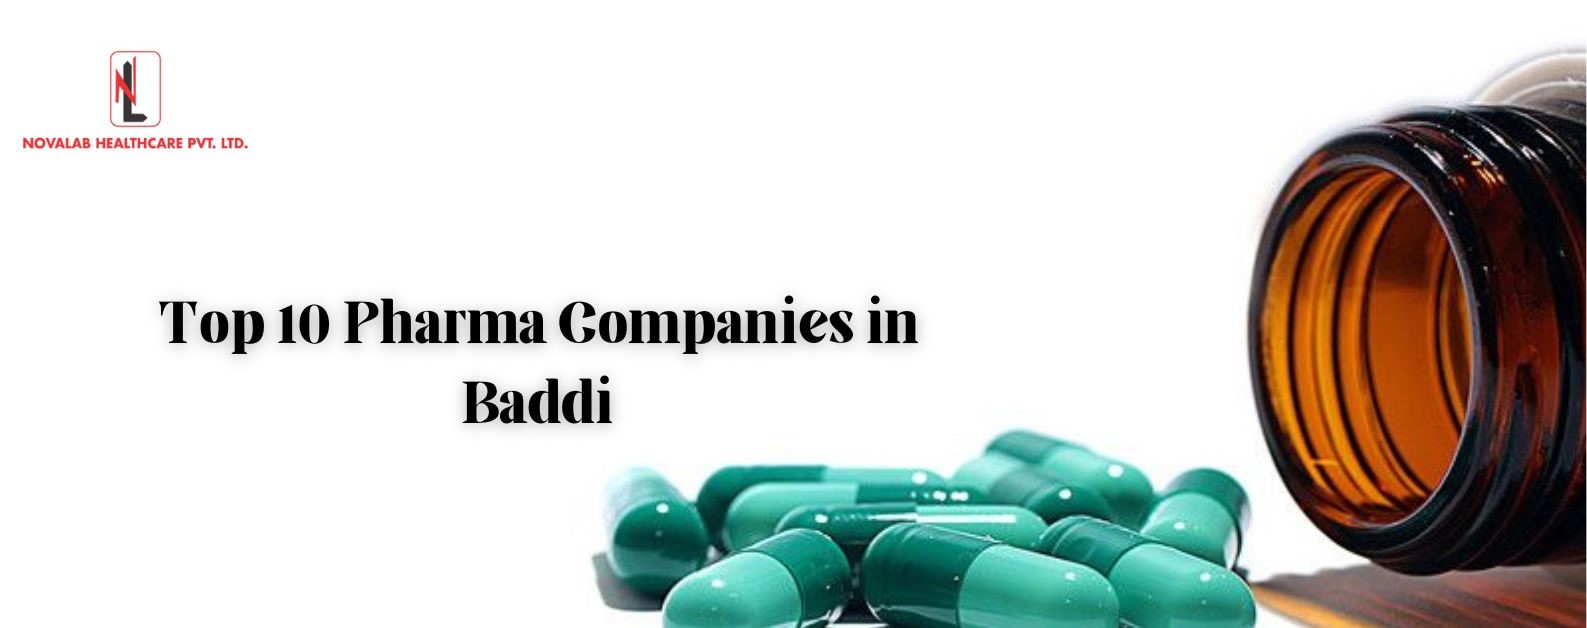 Top 10 Pharma Companies in Baddi